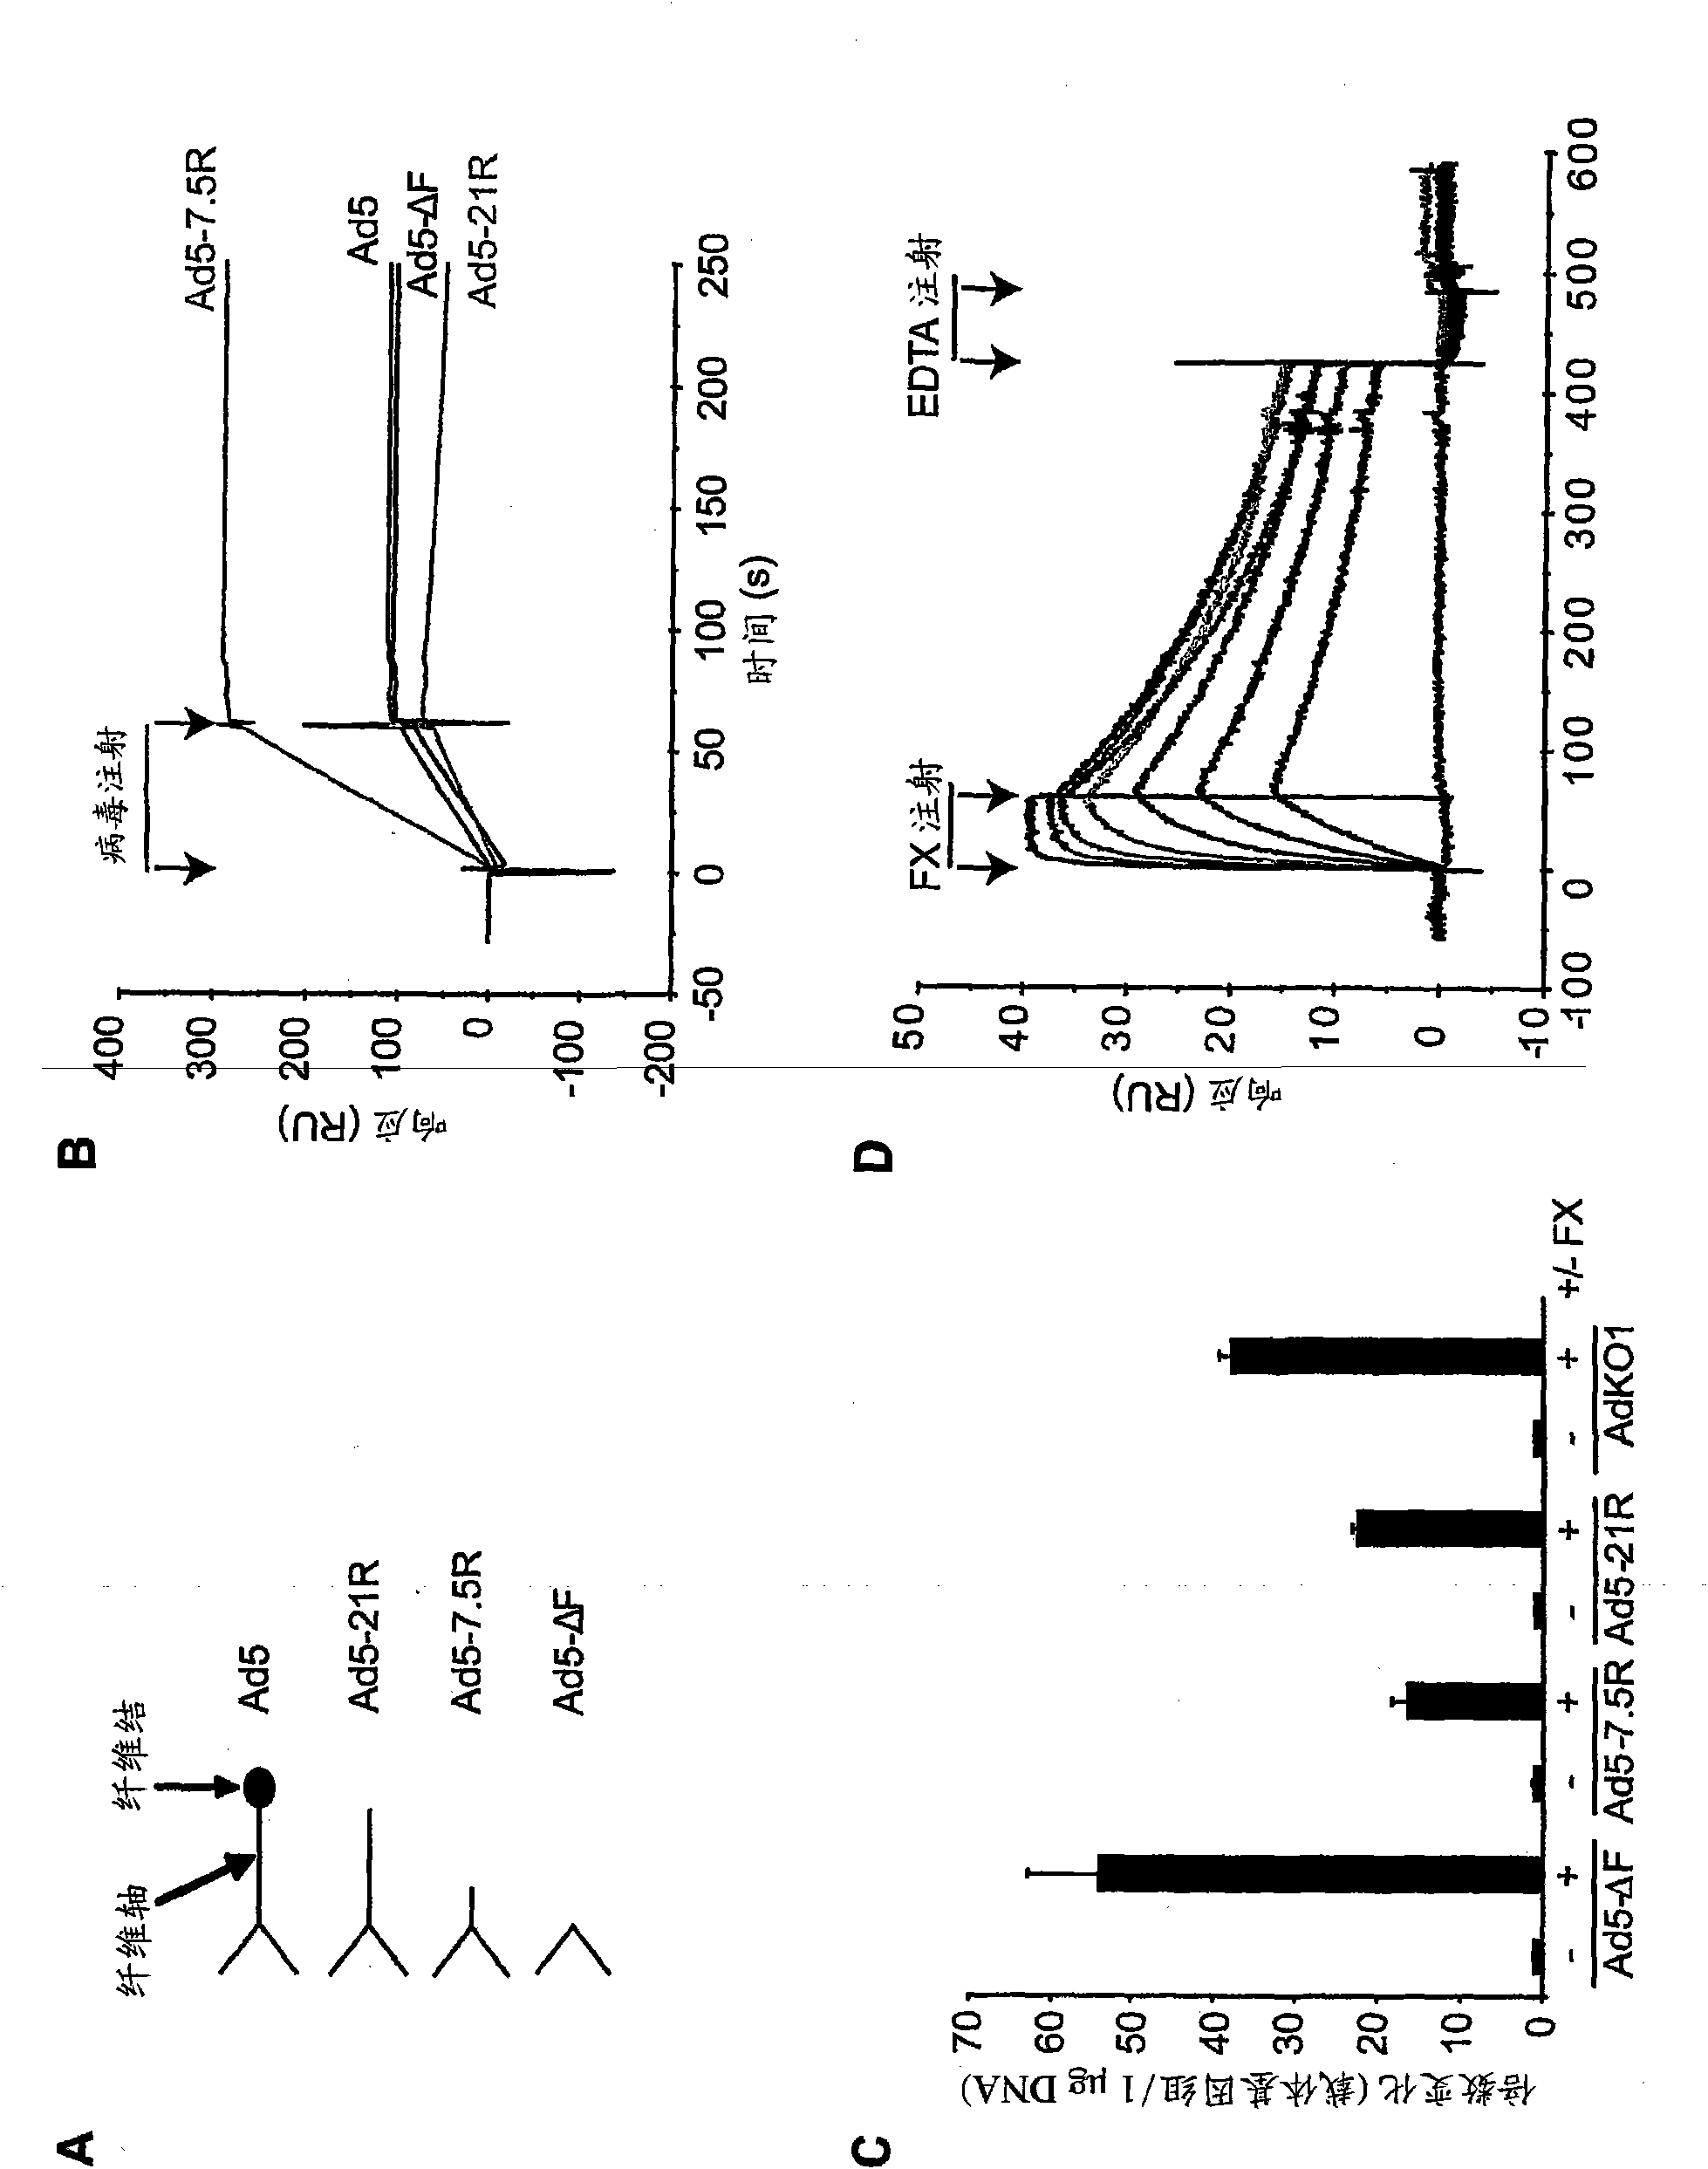 Modulation of adenoviral tropism